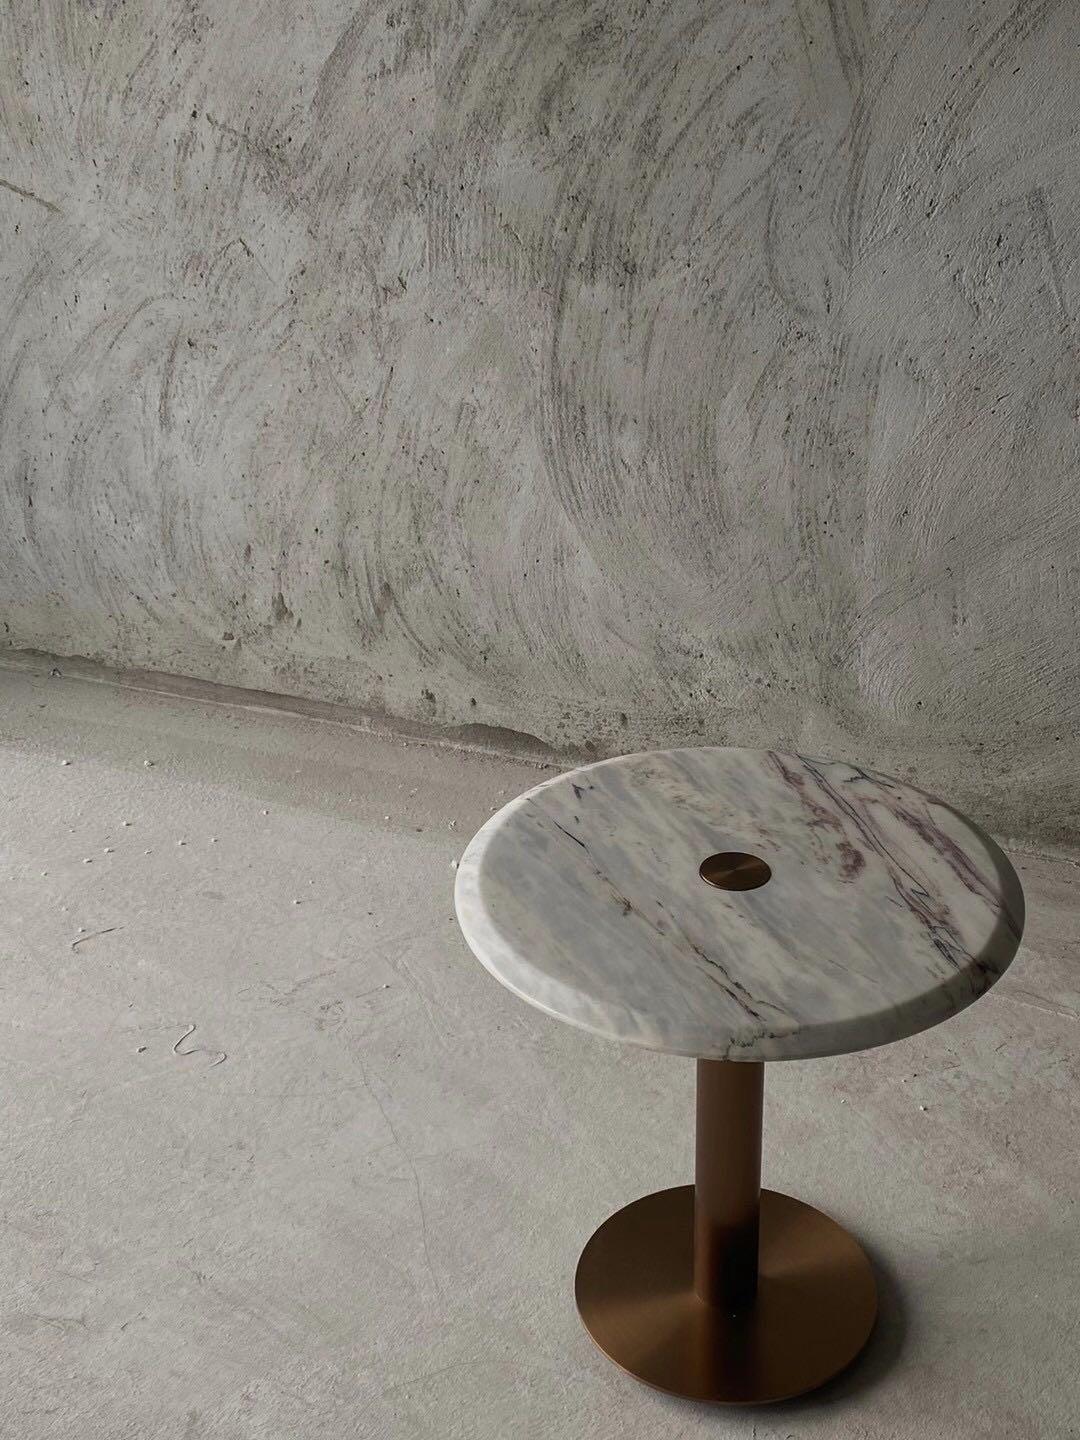 NORDST LEA Side Table, Italian White Mountain Marble, Danish Modern Design, New For Sale 2